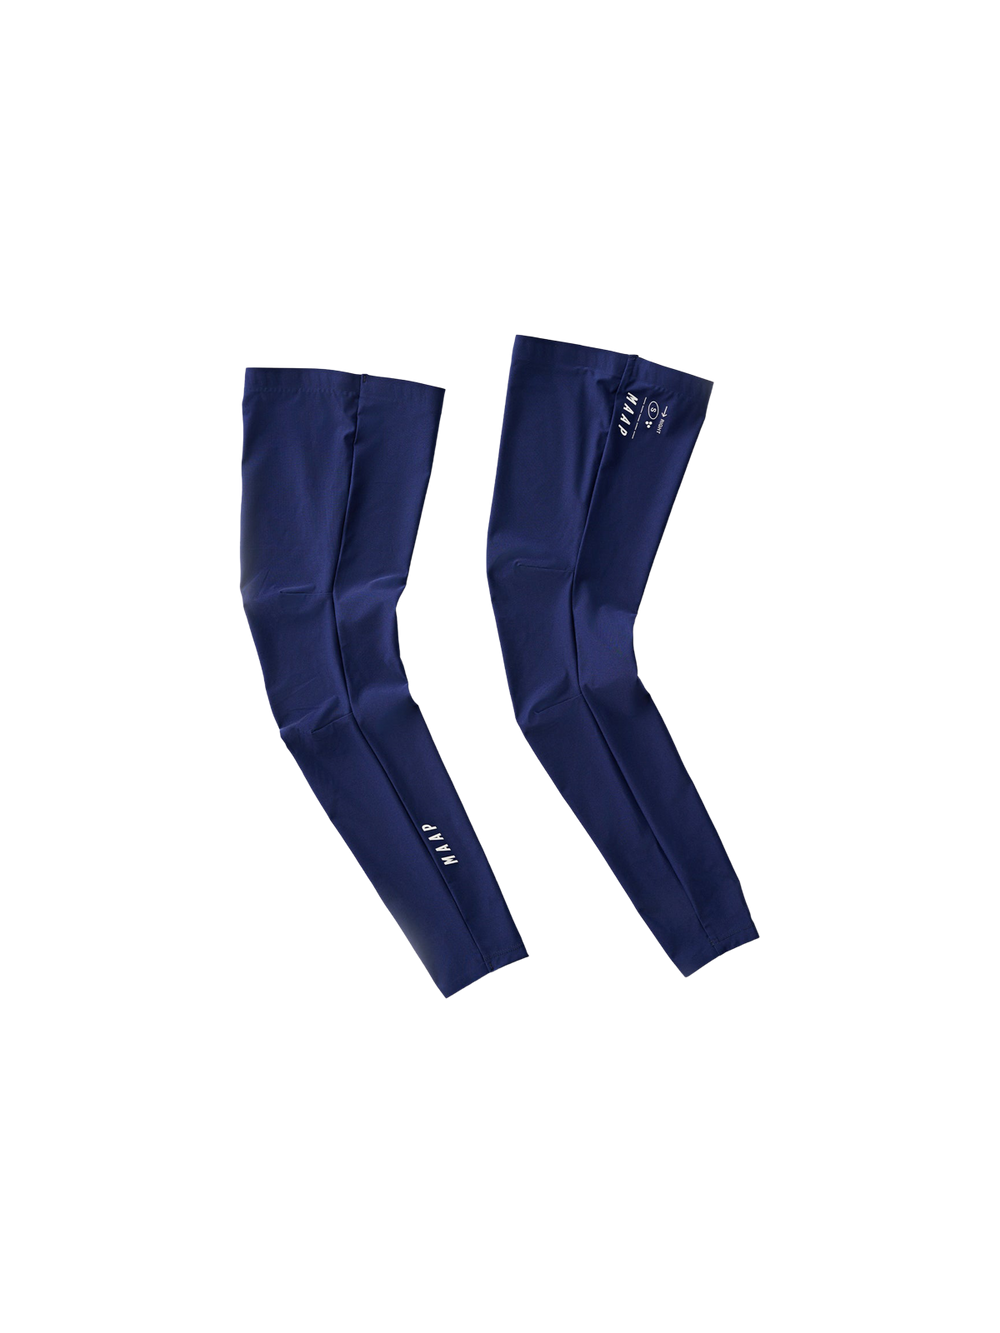 Product Image for UV Leg Screens